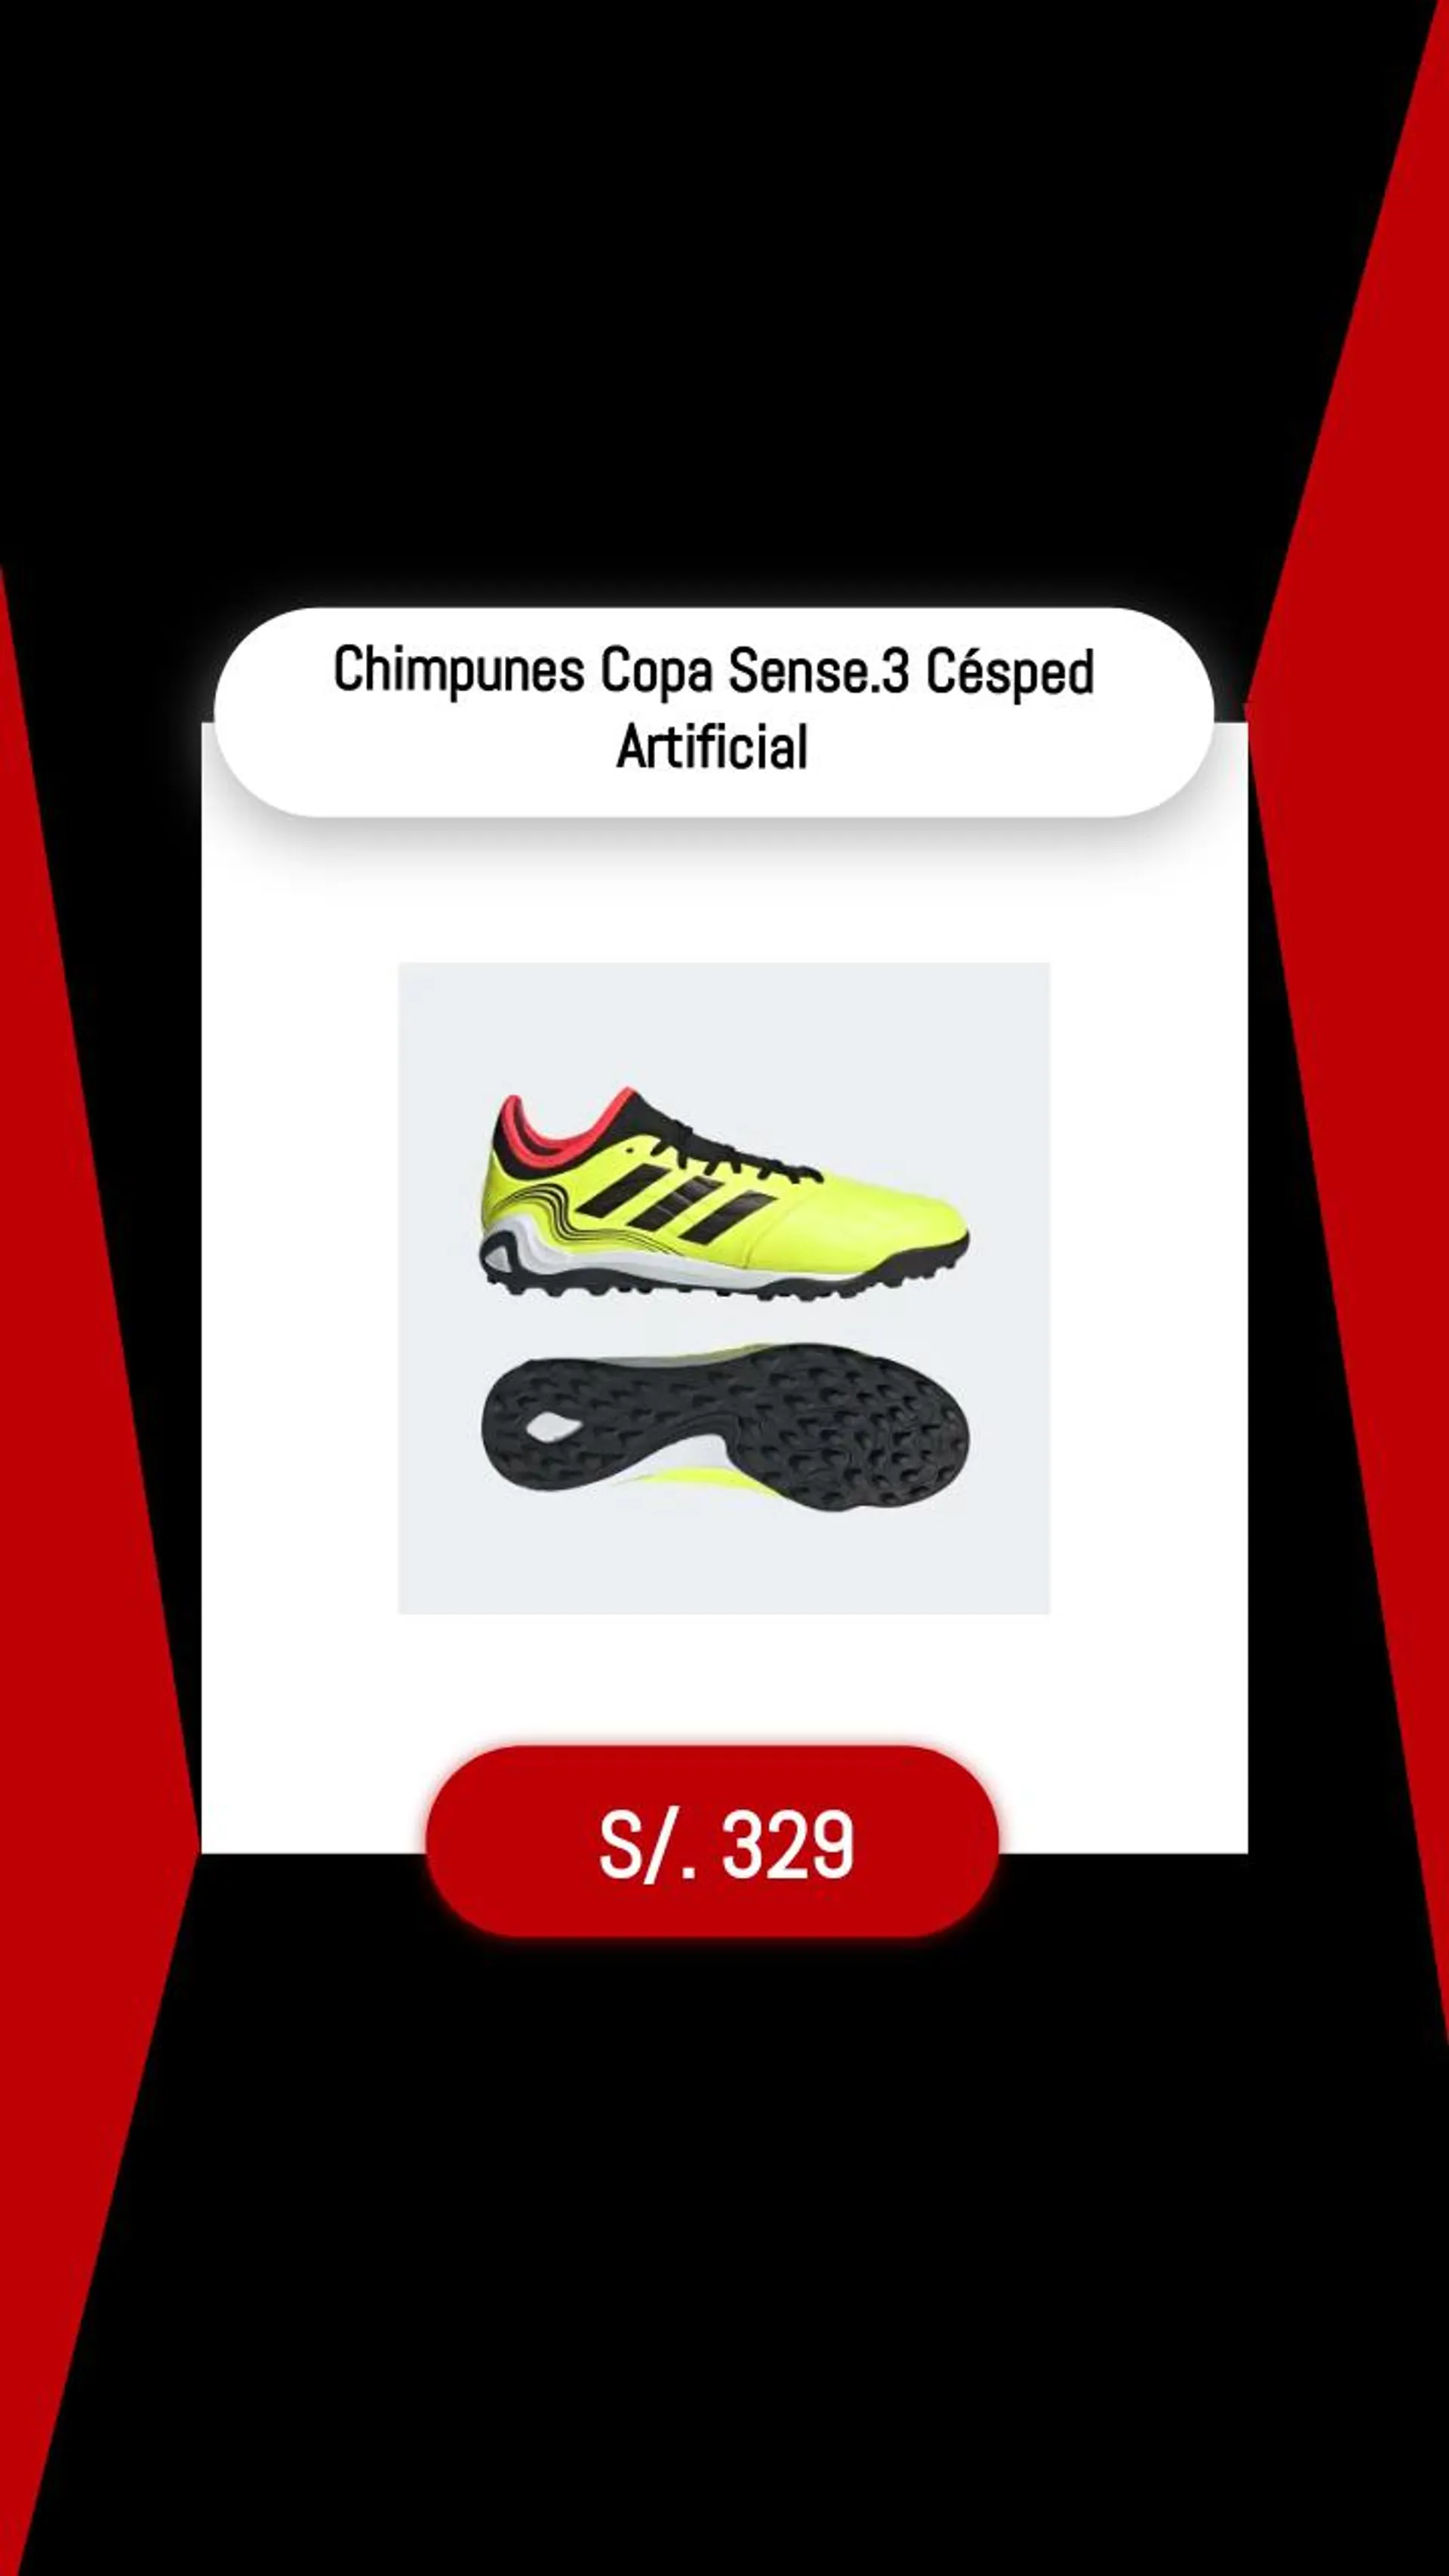 Chimpunes Copa Sense.3 Césped Artificial